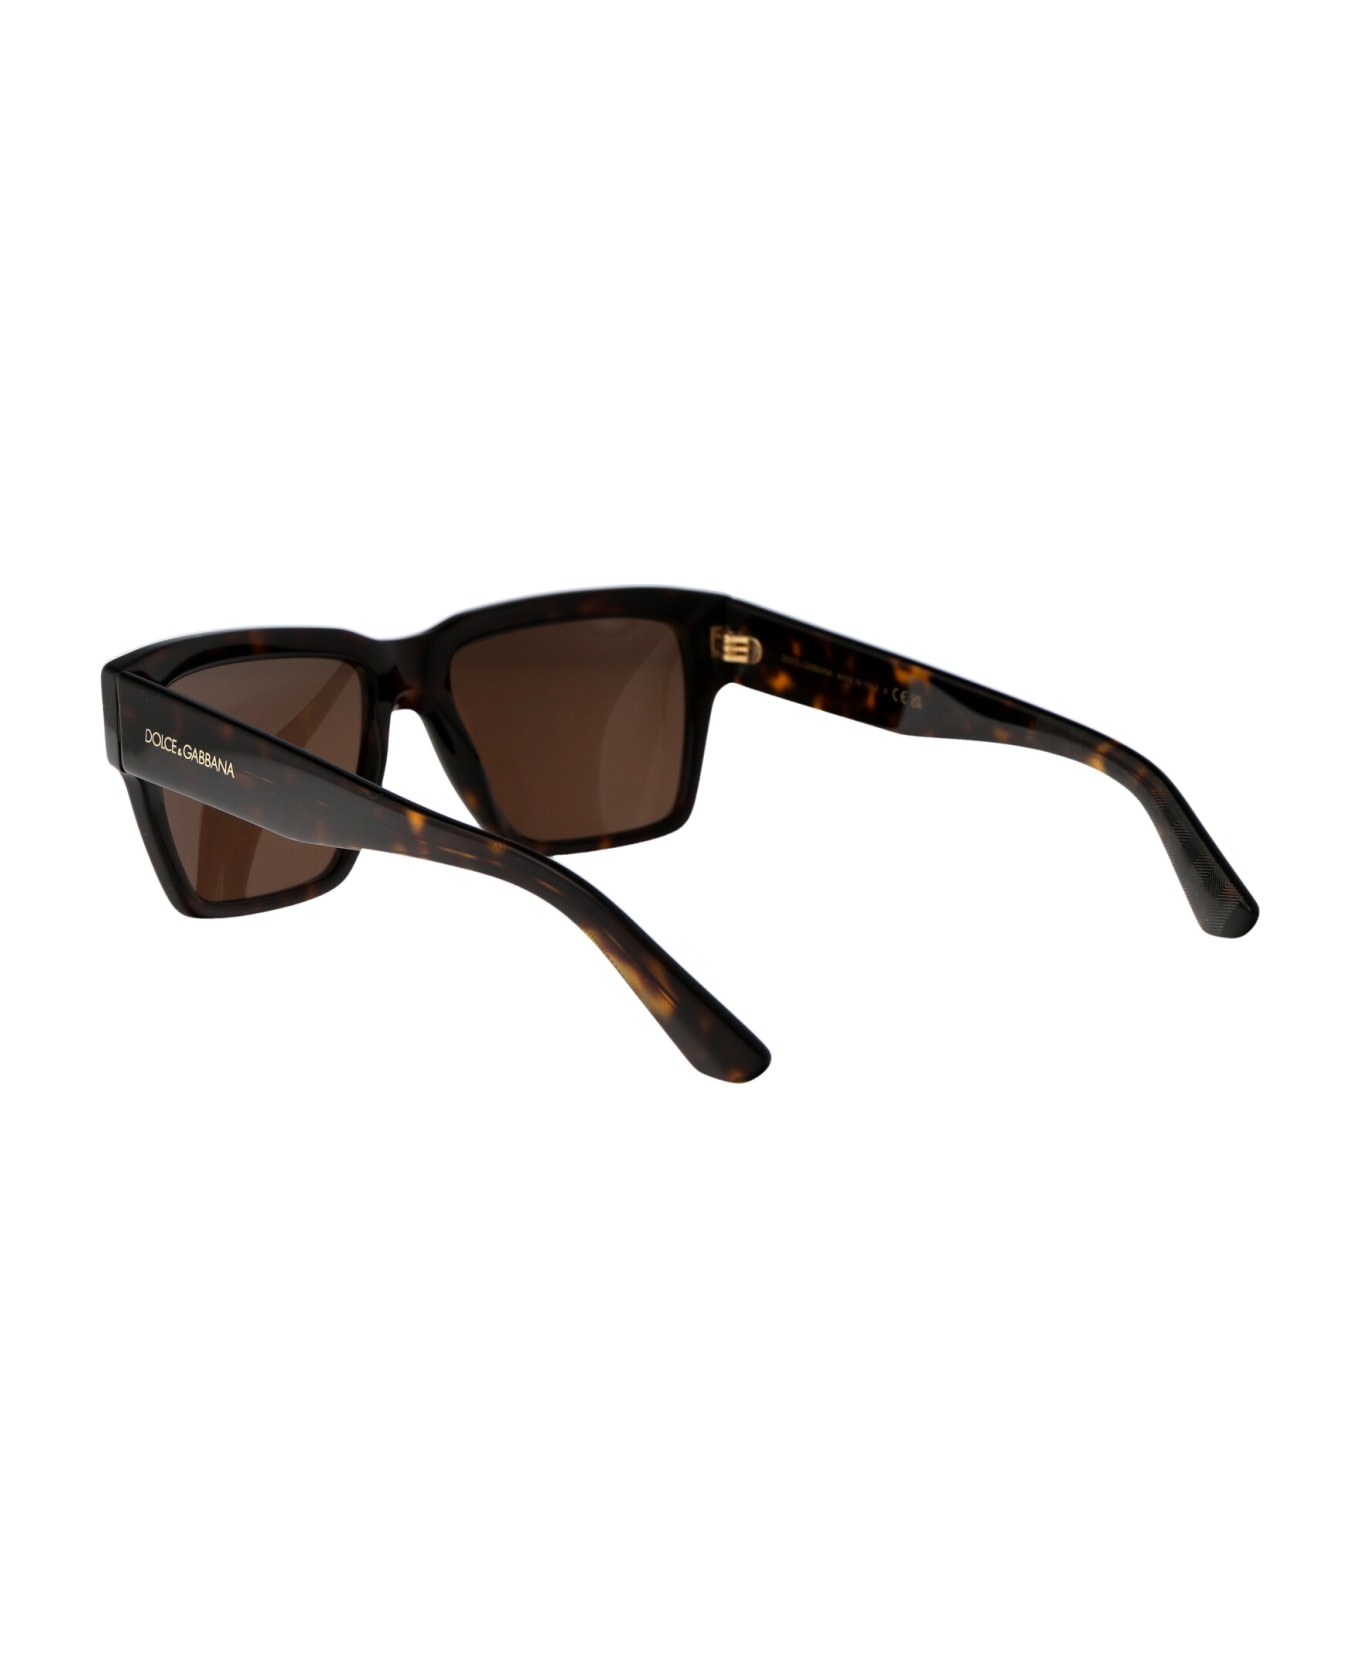 LATCH BETA SUNGLASSES OO9436 Eyewear 0dg4431 Sunglasses - 502/73 HAVANA